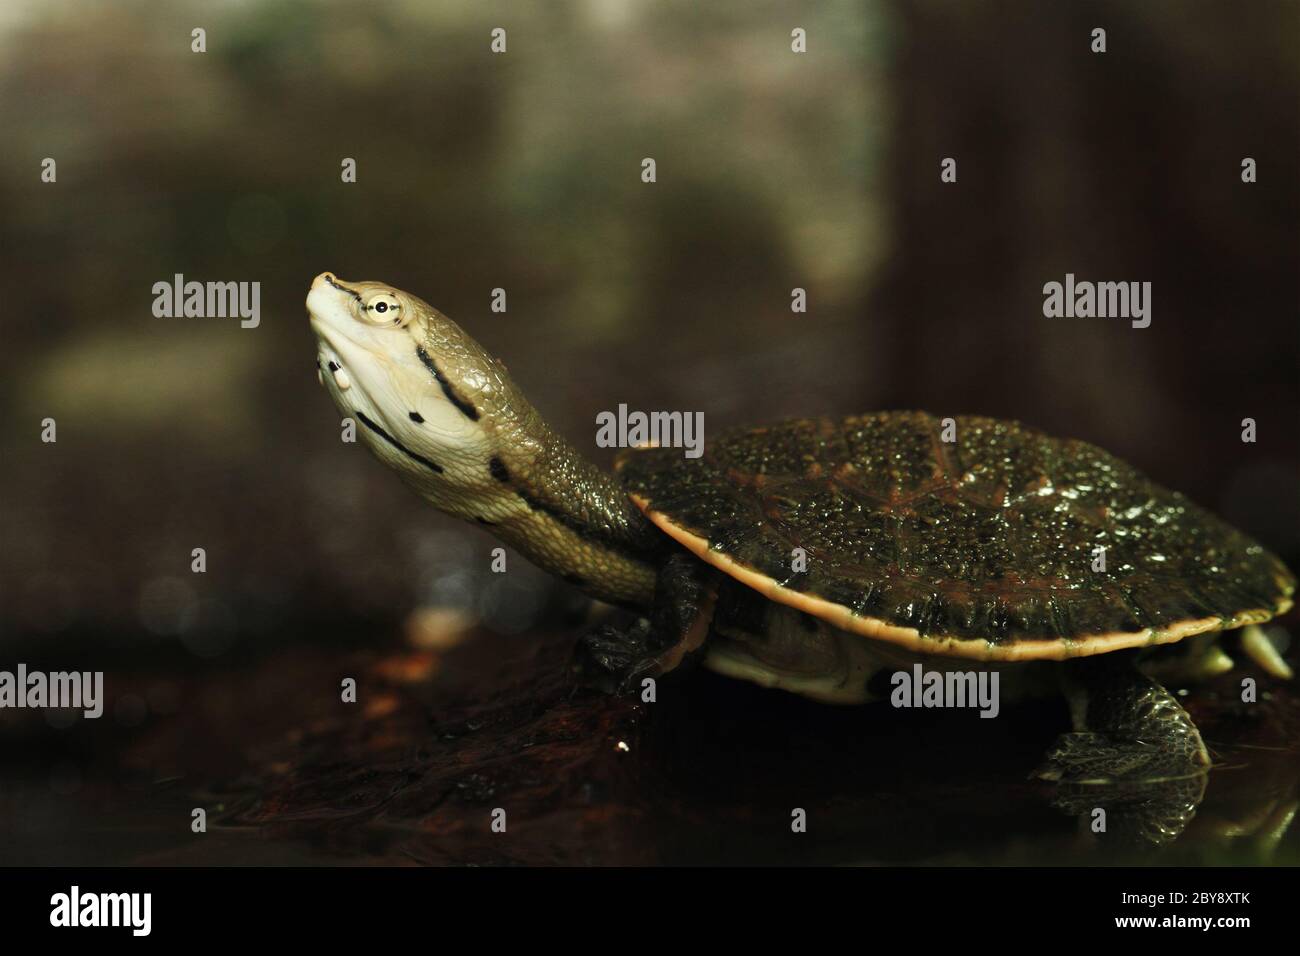 Phrynops hilarii (Spot-bellied side-necked turtle) Stock Photo